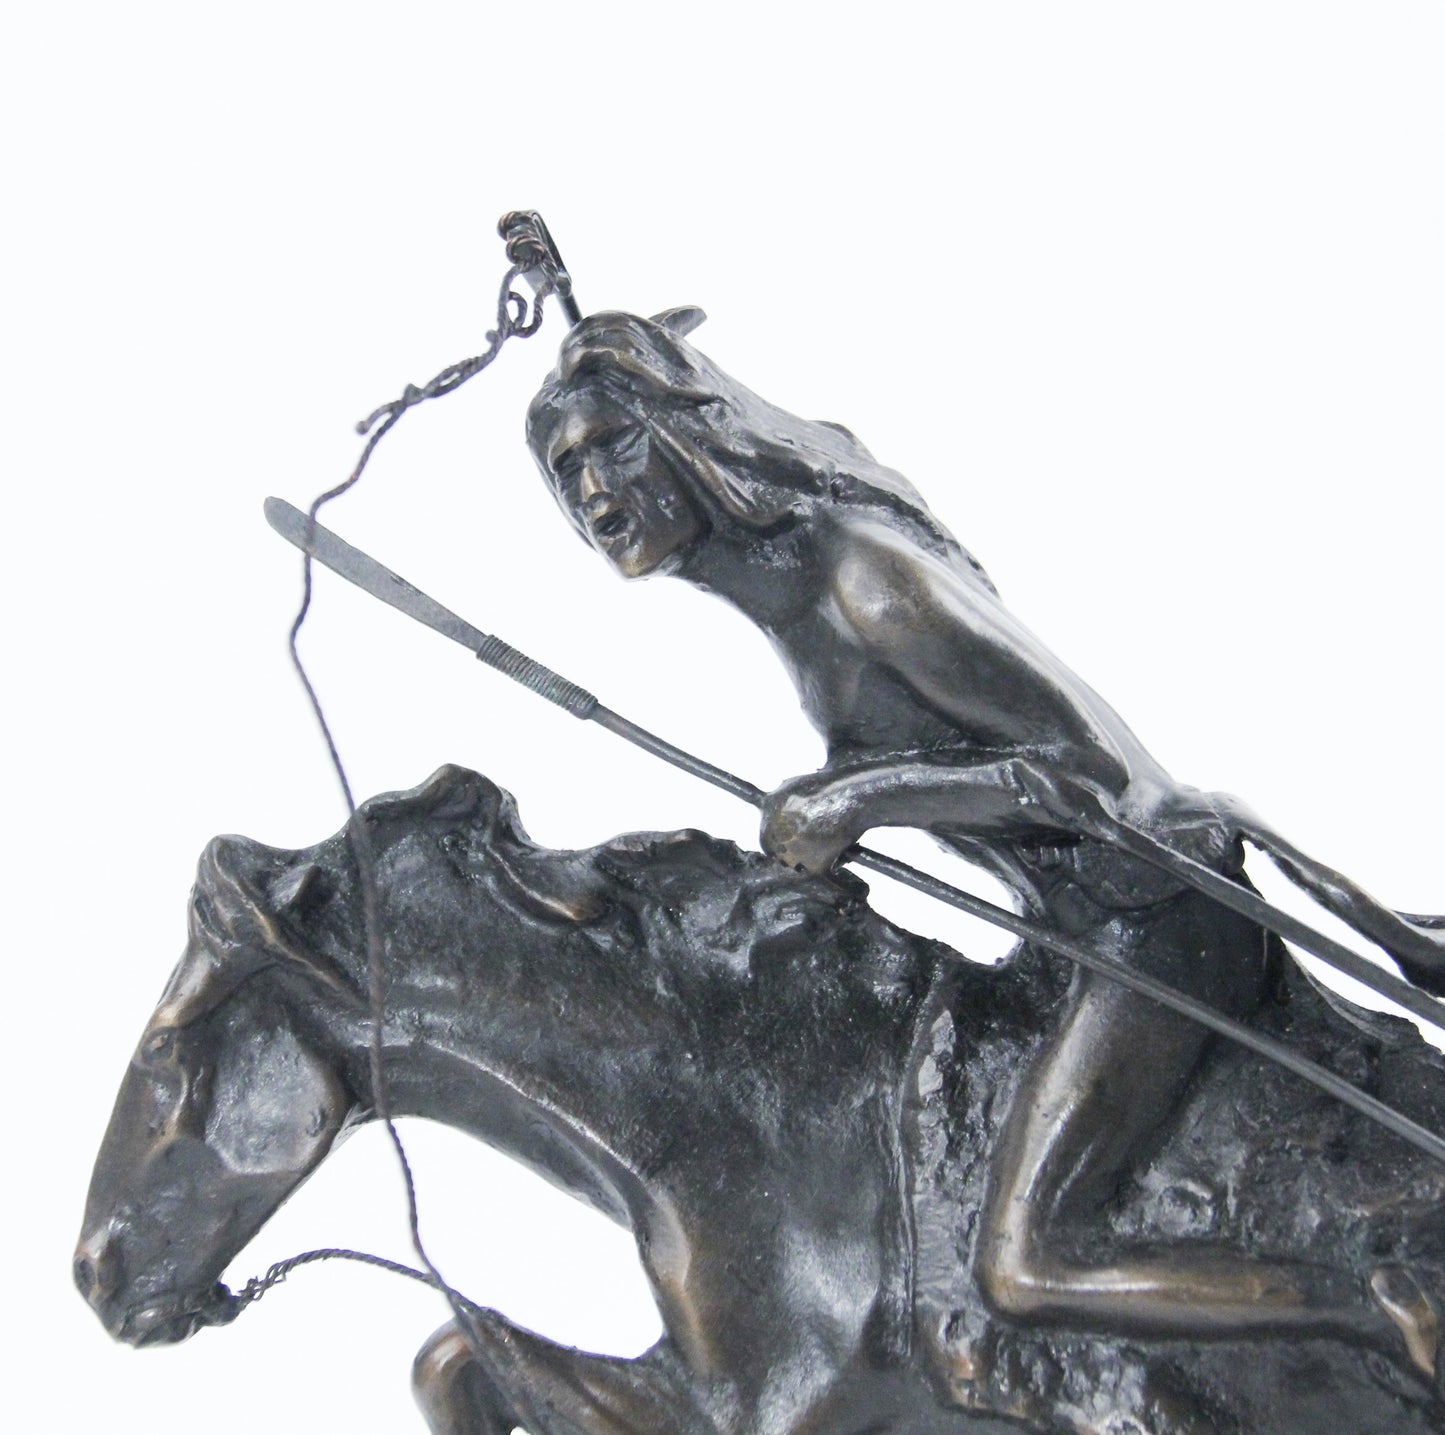 The Cheyenne sculpture bronze cast replica Frederic Remington western artist warrior riding into battle on his horse detail